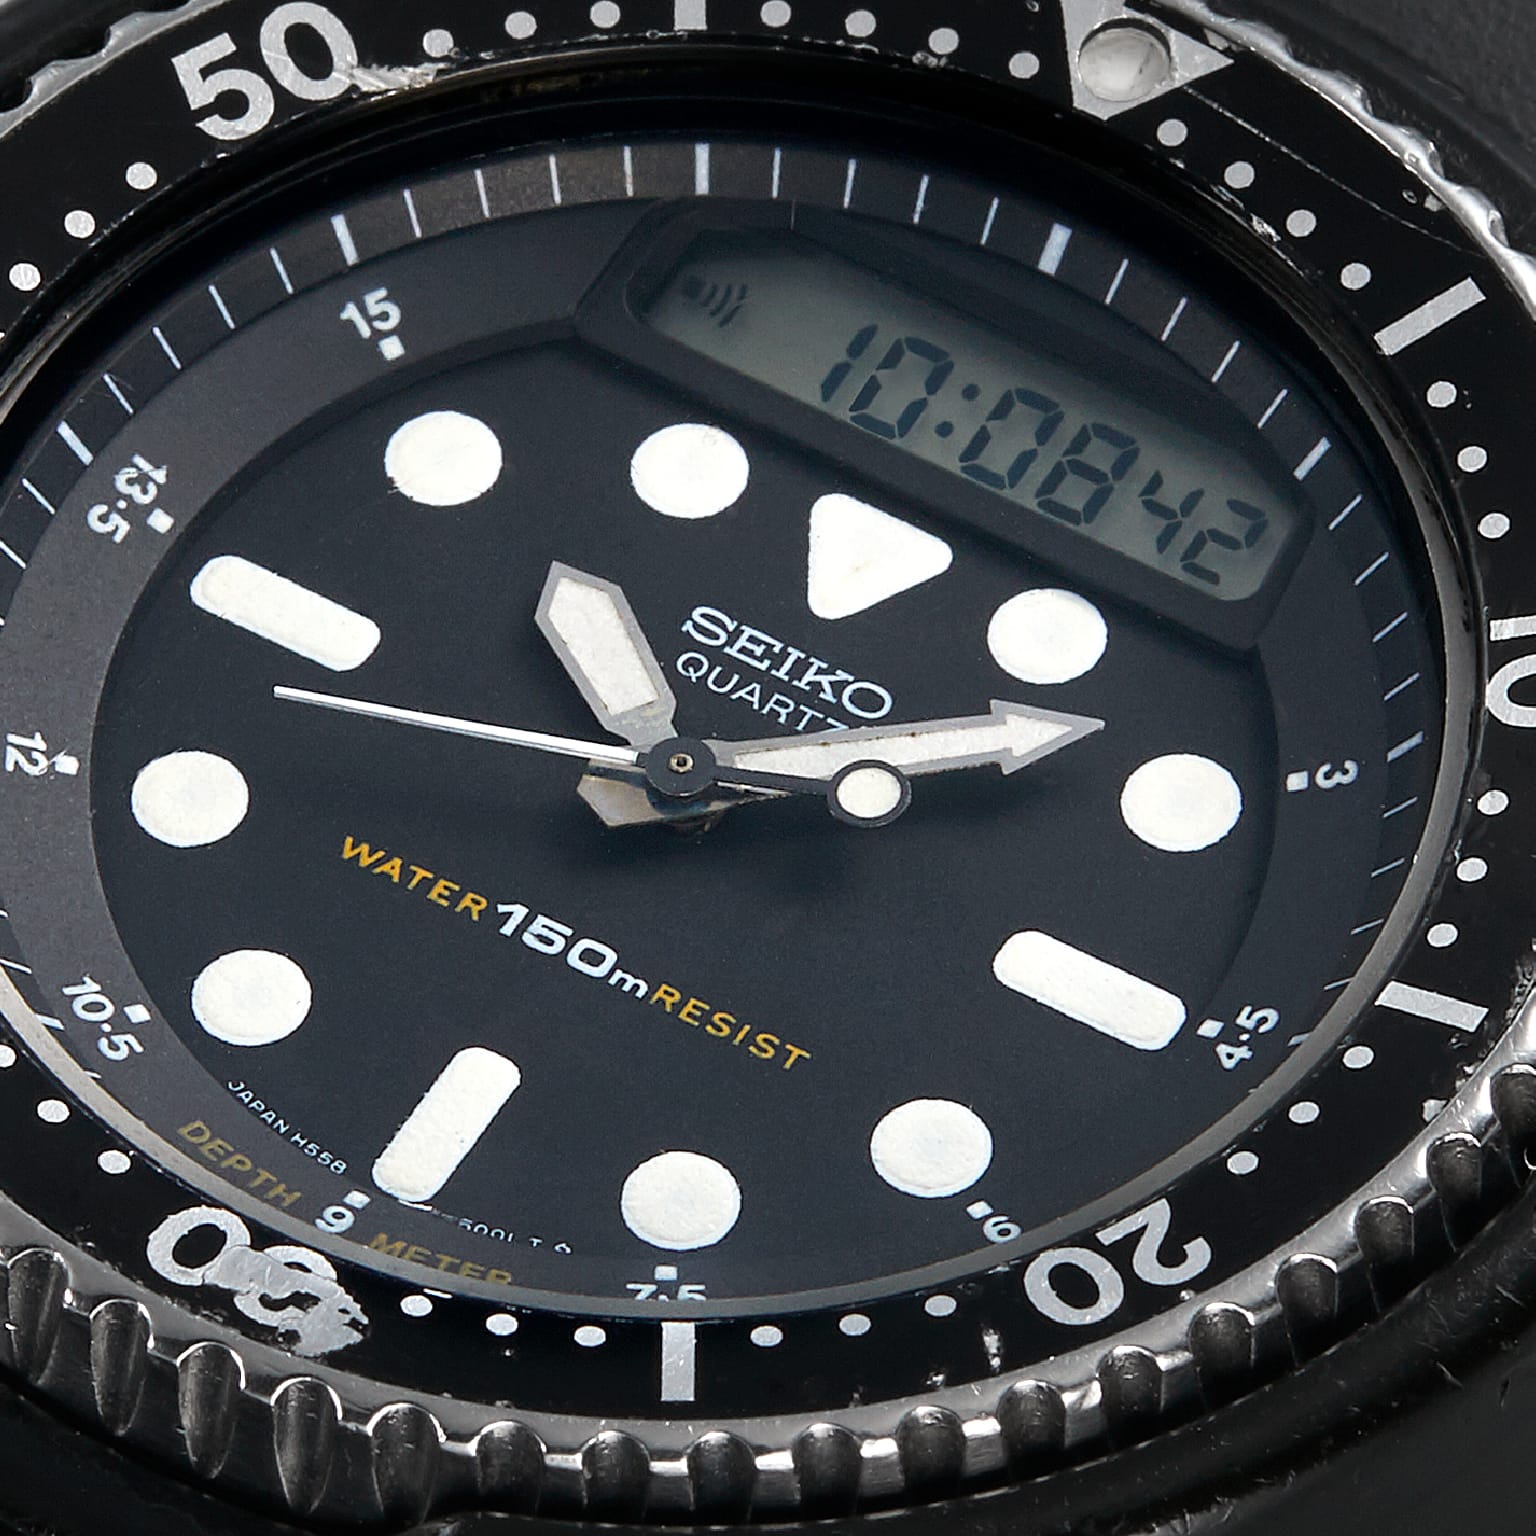 1982 Hybrid Diver's Watch | Seiko Design 140